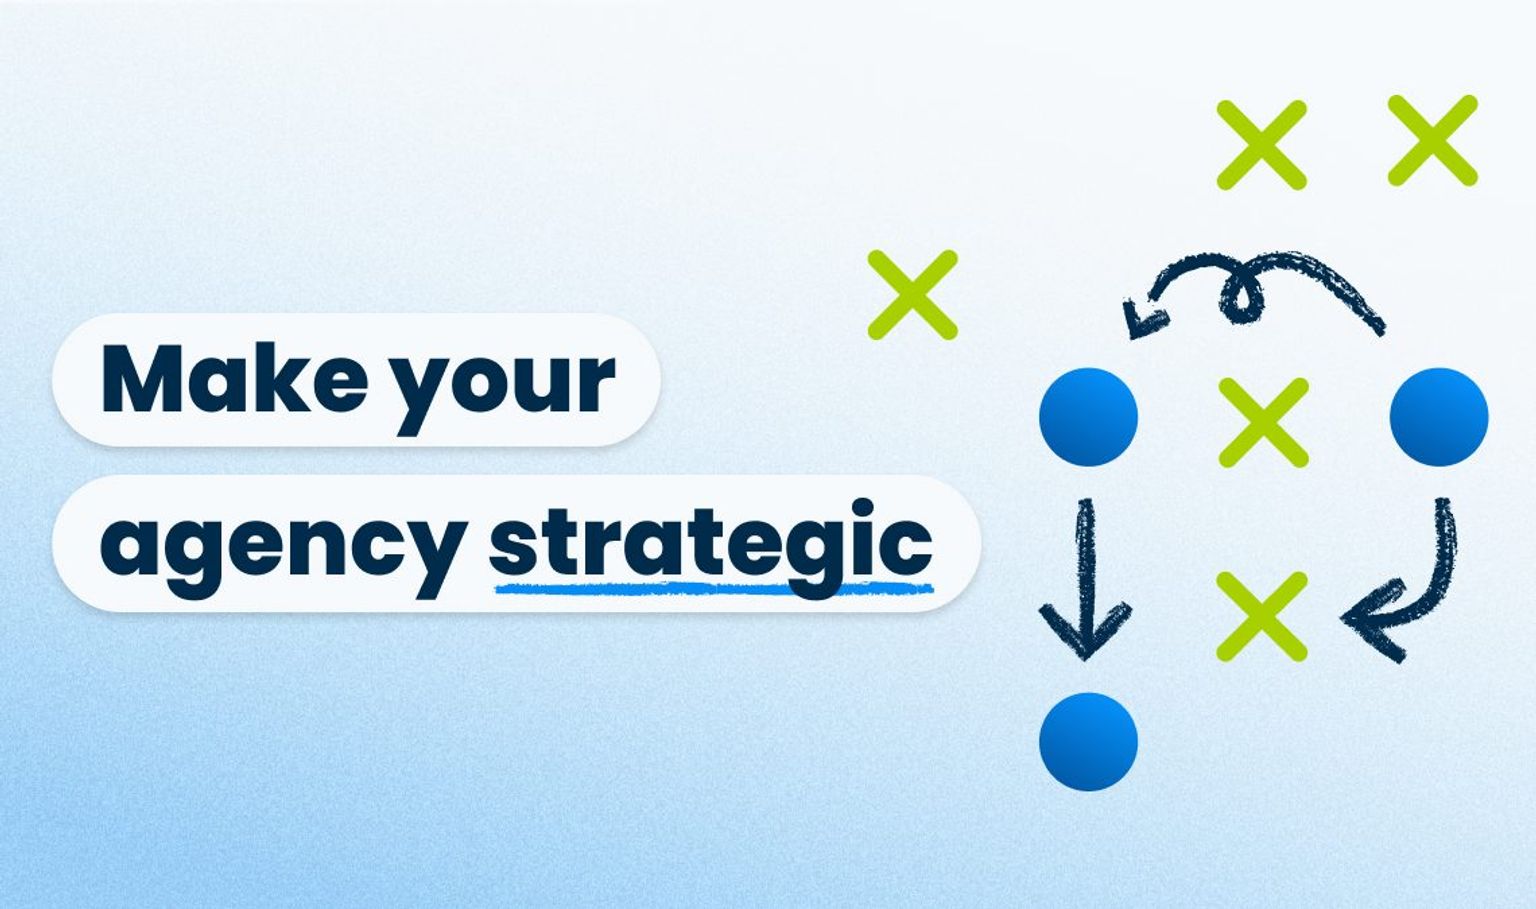 Make your agency strategic